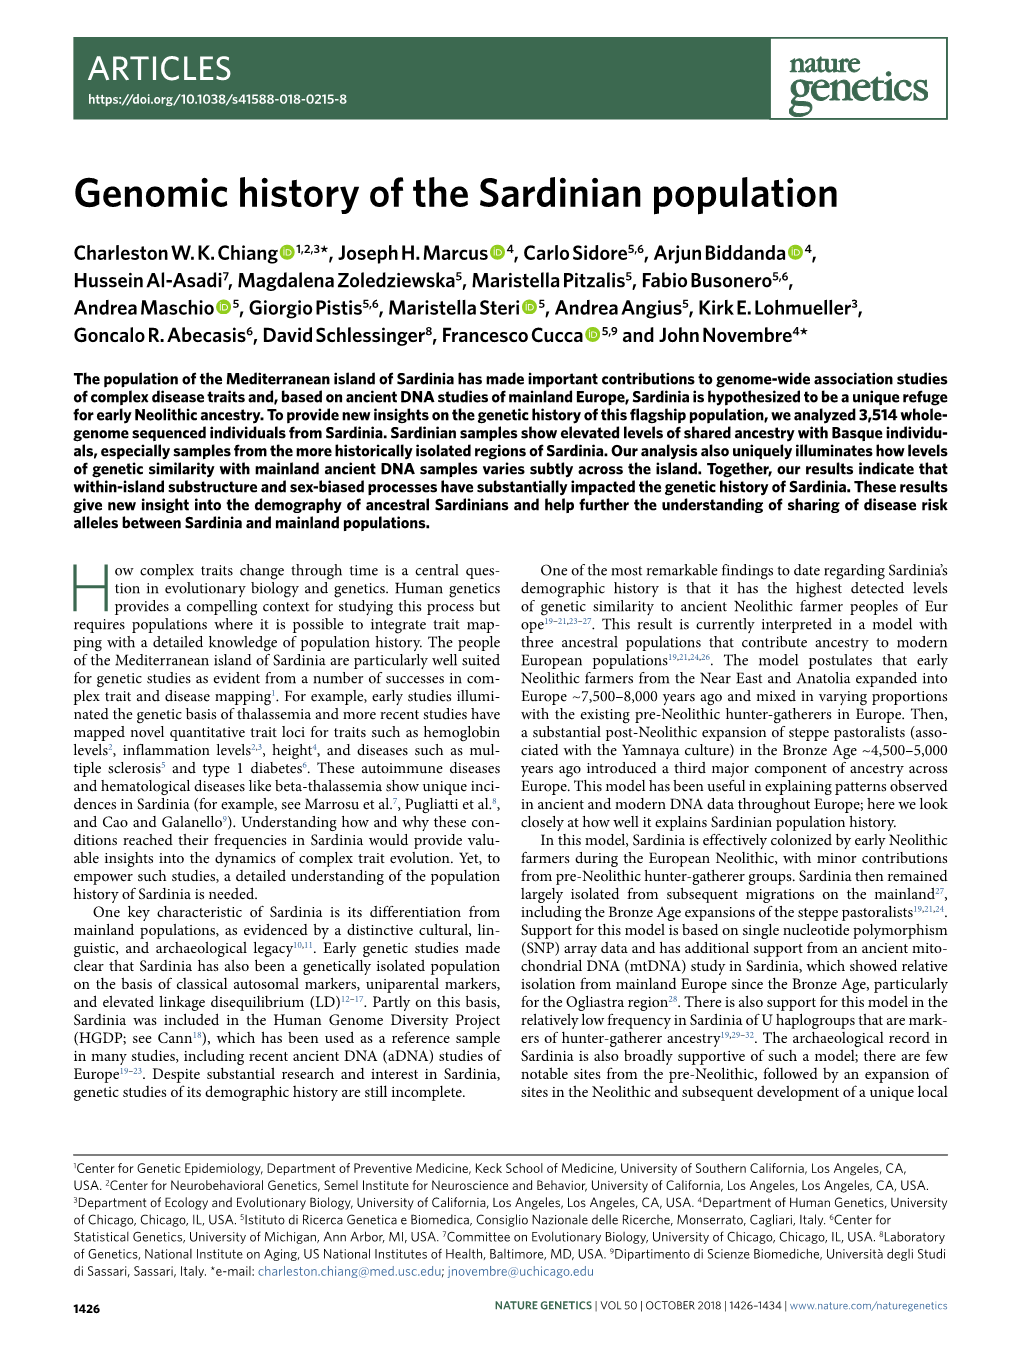 Genomic History of the Sardinian Population